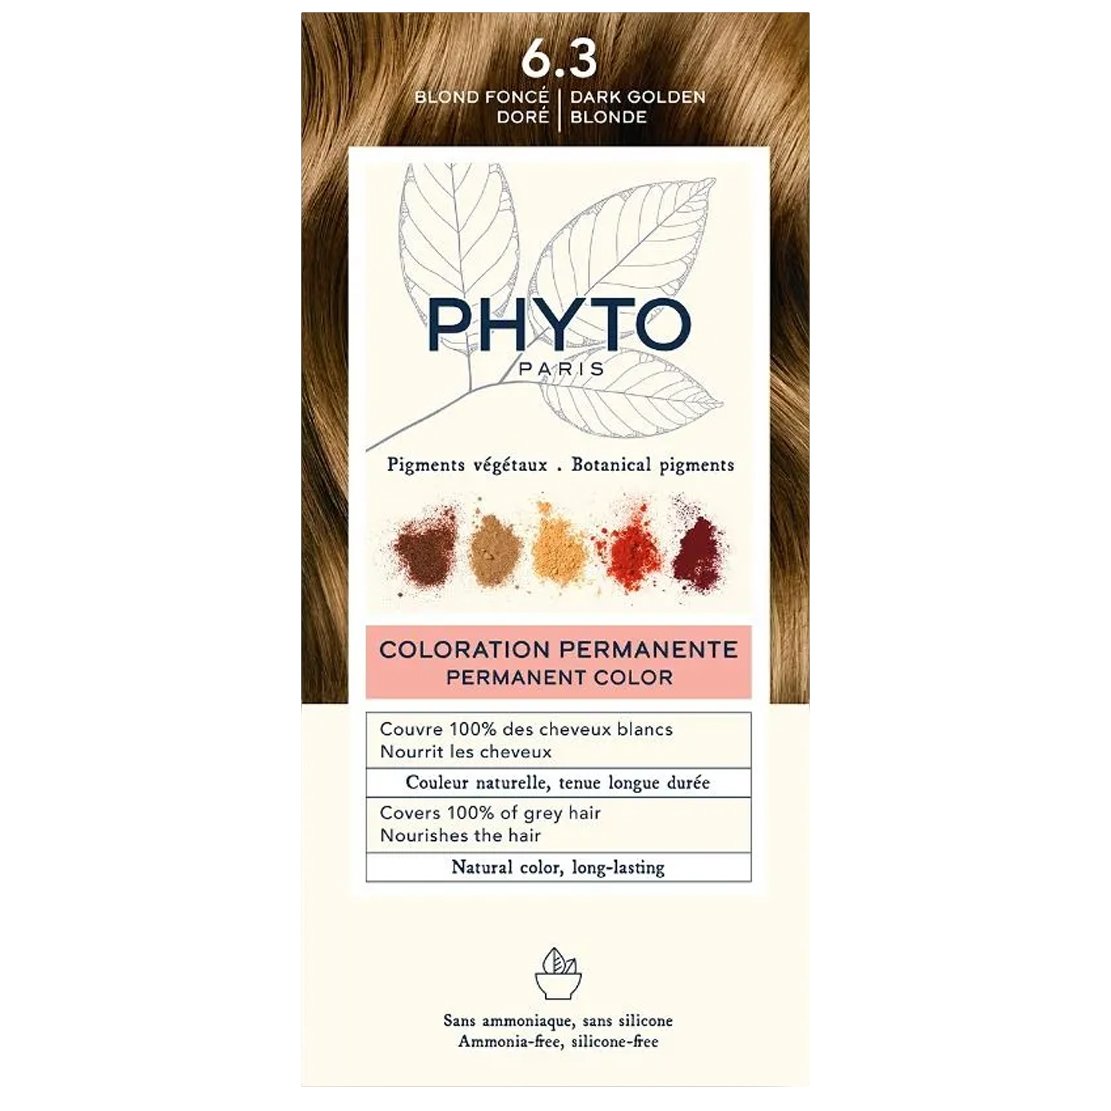 Phyto Permanent Hair Color Kit Μόνιμη Βαφή Μαλλιών με Φυτικές Χρωστικές, Χωρίς Αμμωνία 1 Τεμάχιο – 6.3 Ξανθό Σκούρο Χρυσό